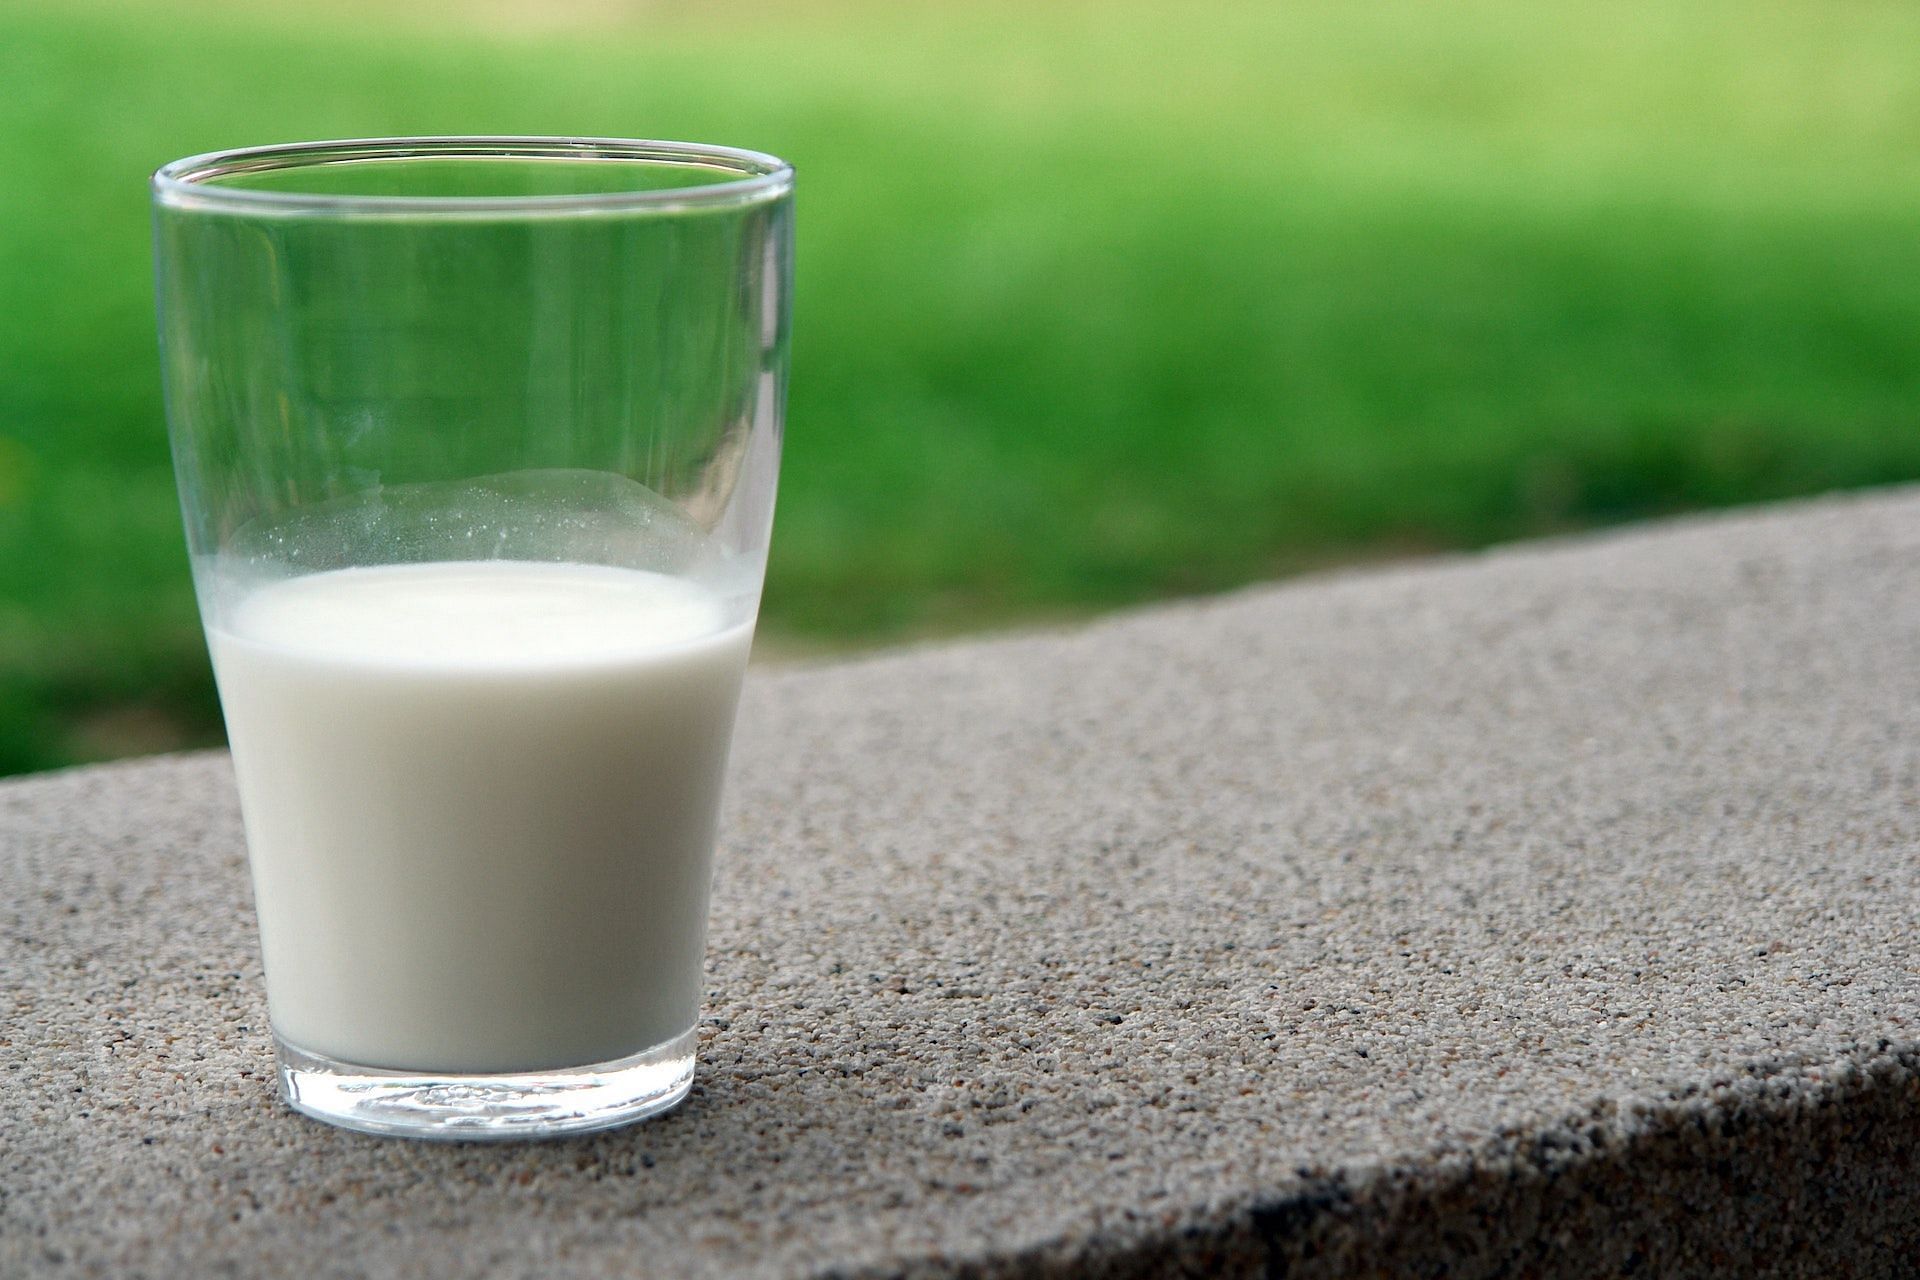 Nutrition in oat milk includes calcium, dietary fiber, protein, etc.   (Photo via Pexels/Pixabay)